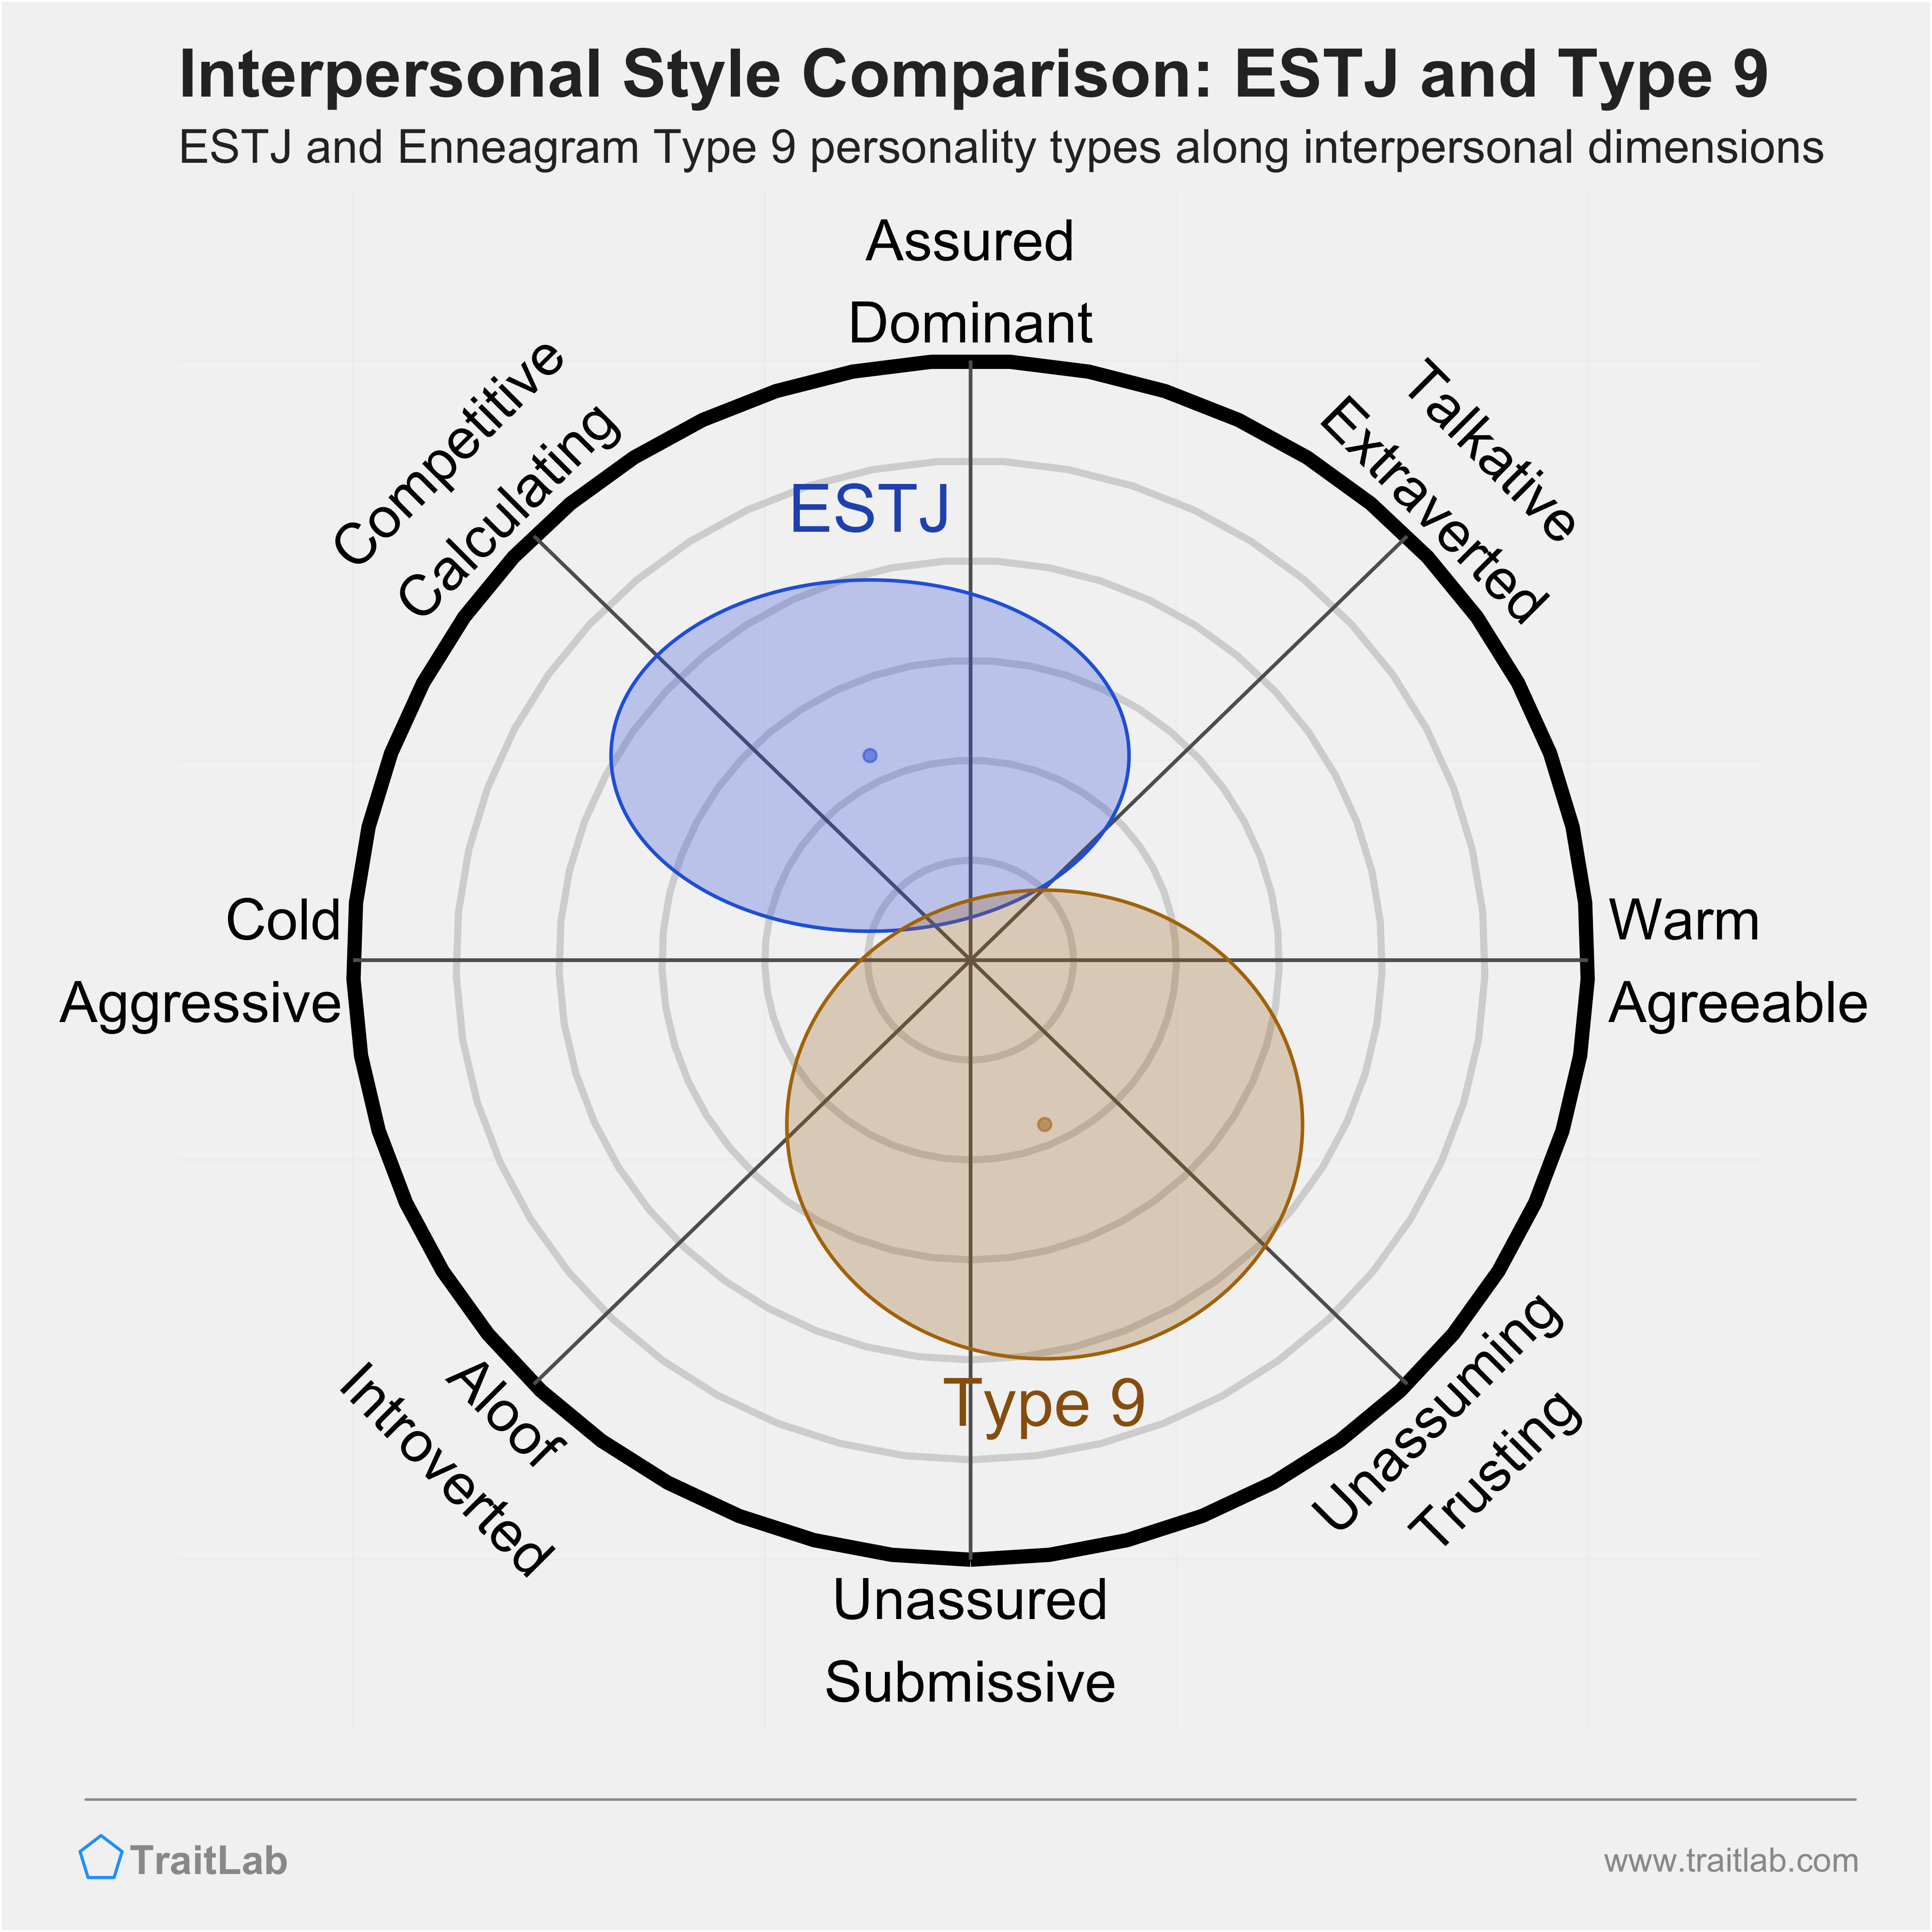 Enneagram ESTJ and Type 9 comparison across interpersonal dimensions